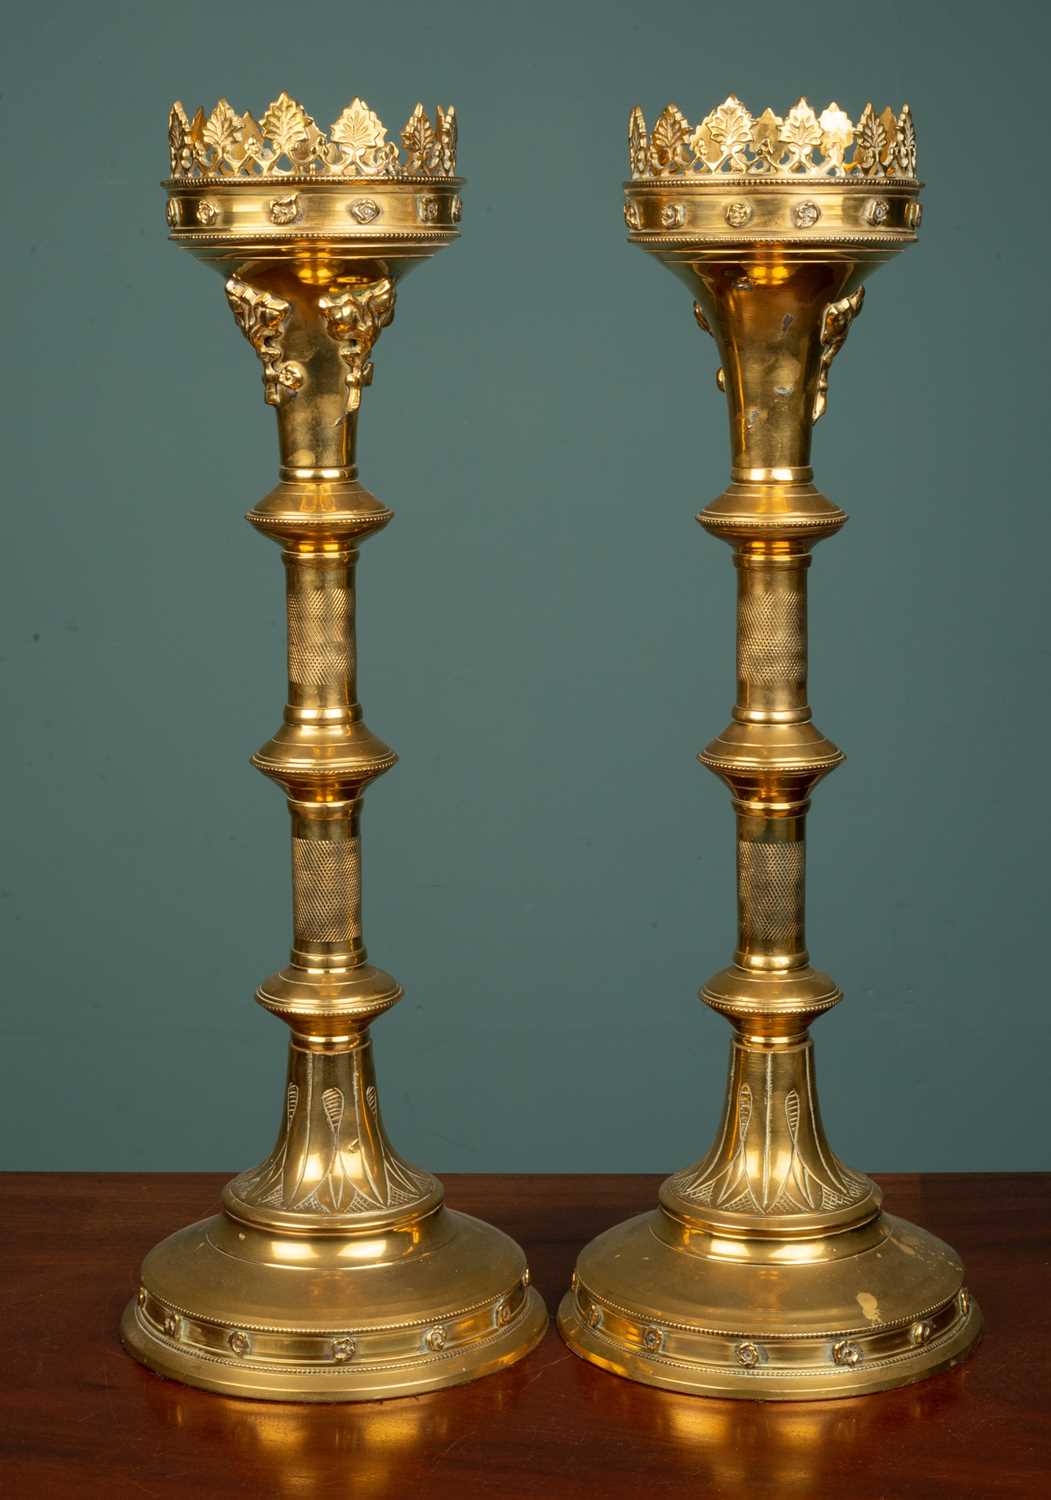 Pair of Gothic pricket candlesticks